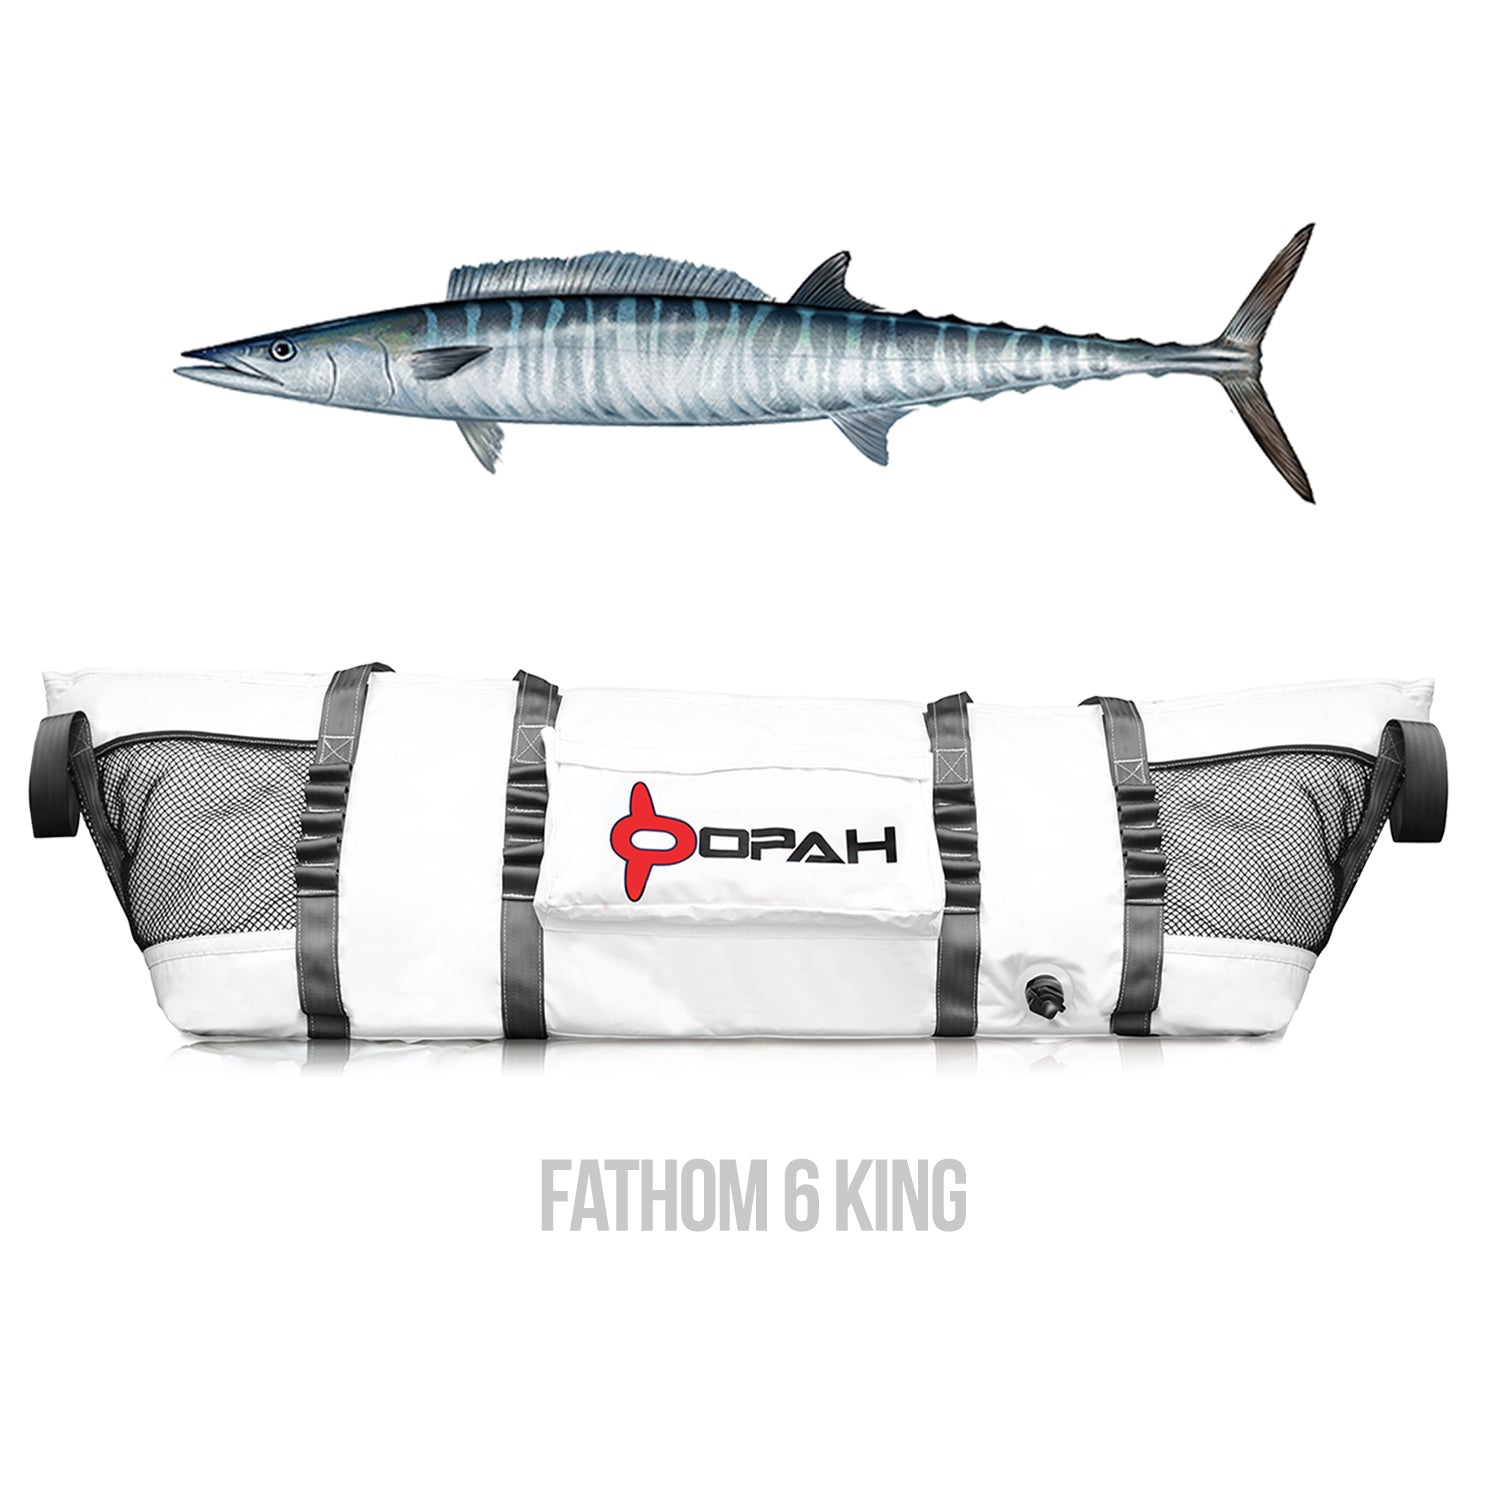 Fathom 6 King Insulated Cooler Bag, King Mackerel 70L x 20W x 18H